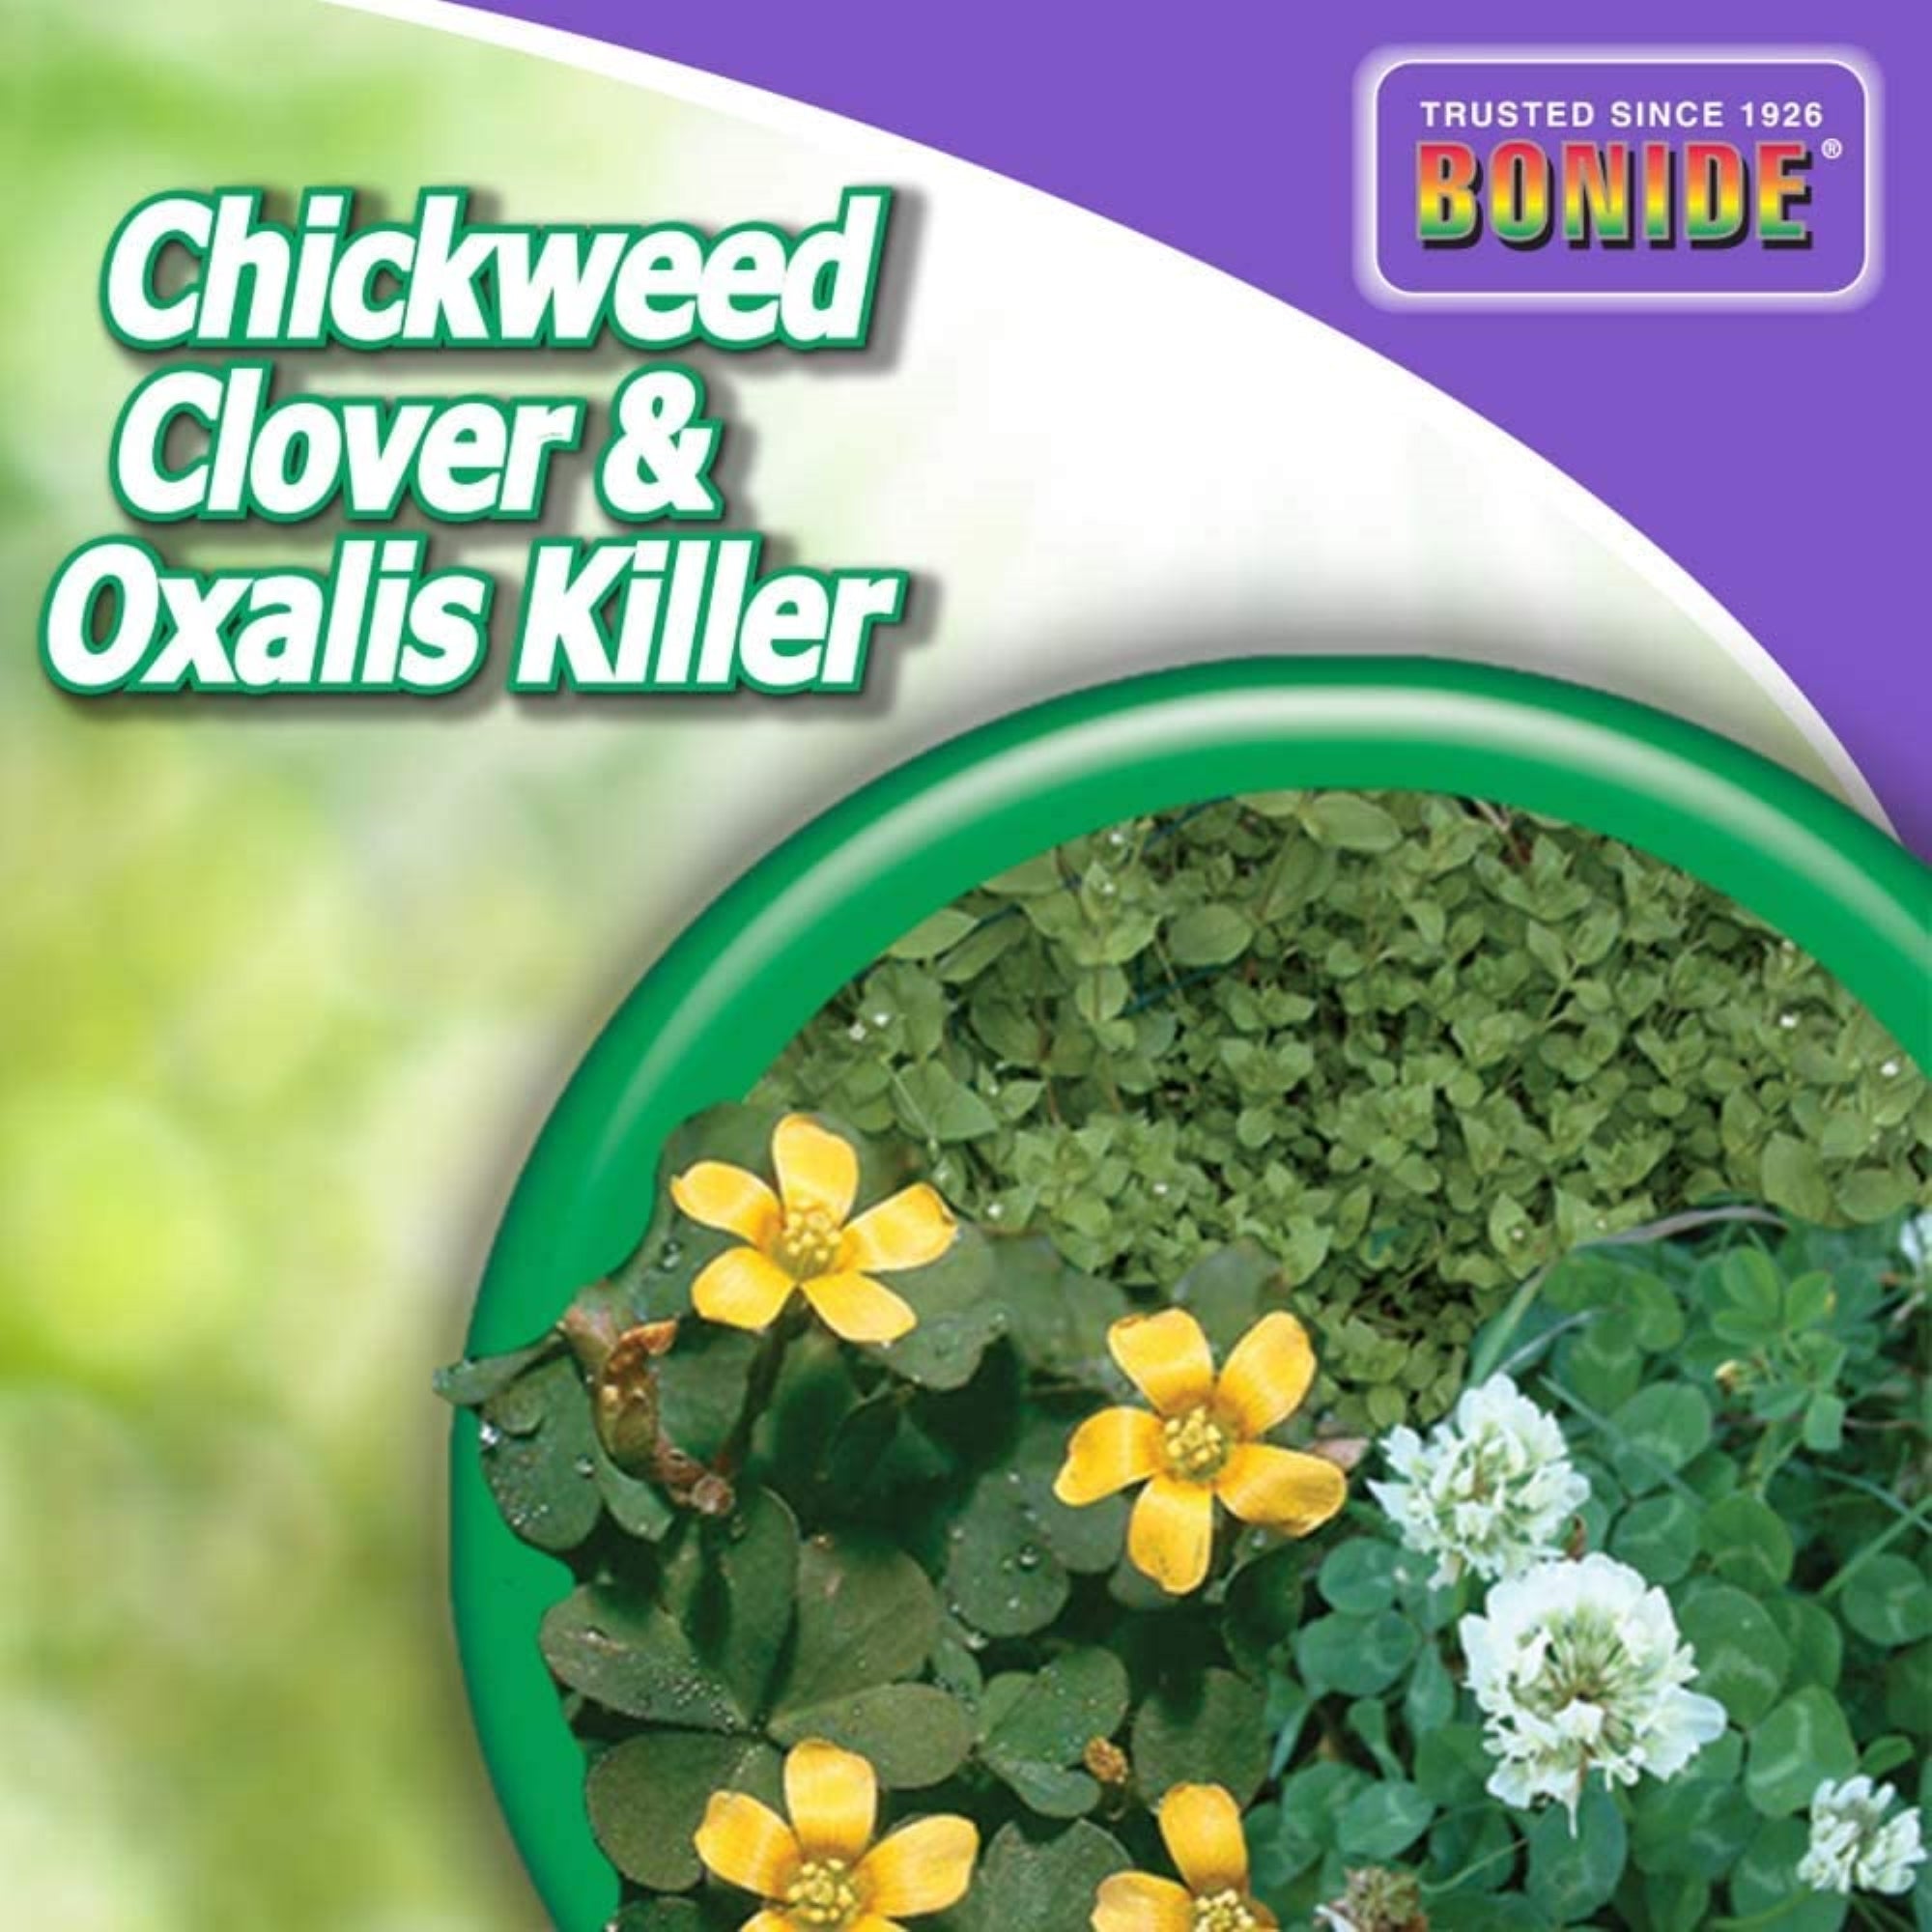 Bonide Ready-to-Use Chickweed, Clover & Oxalis Killer, 32 fl oz